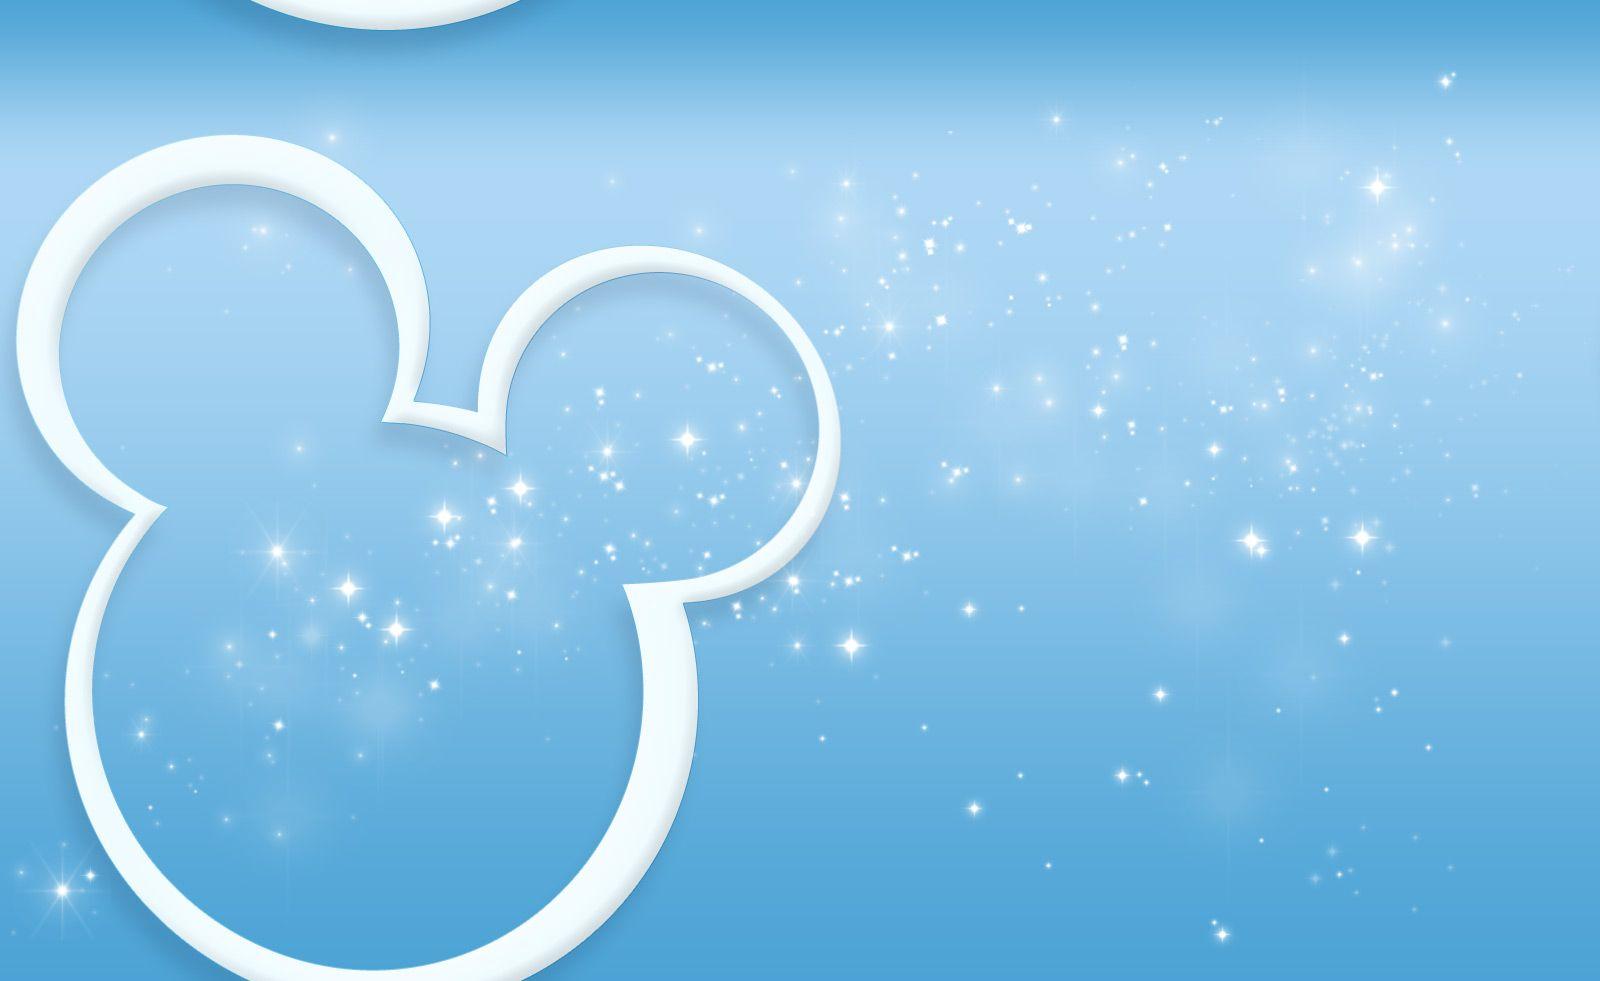 Disney Background Design